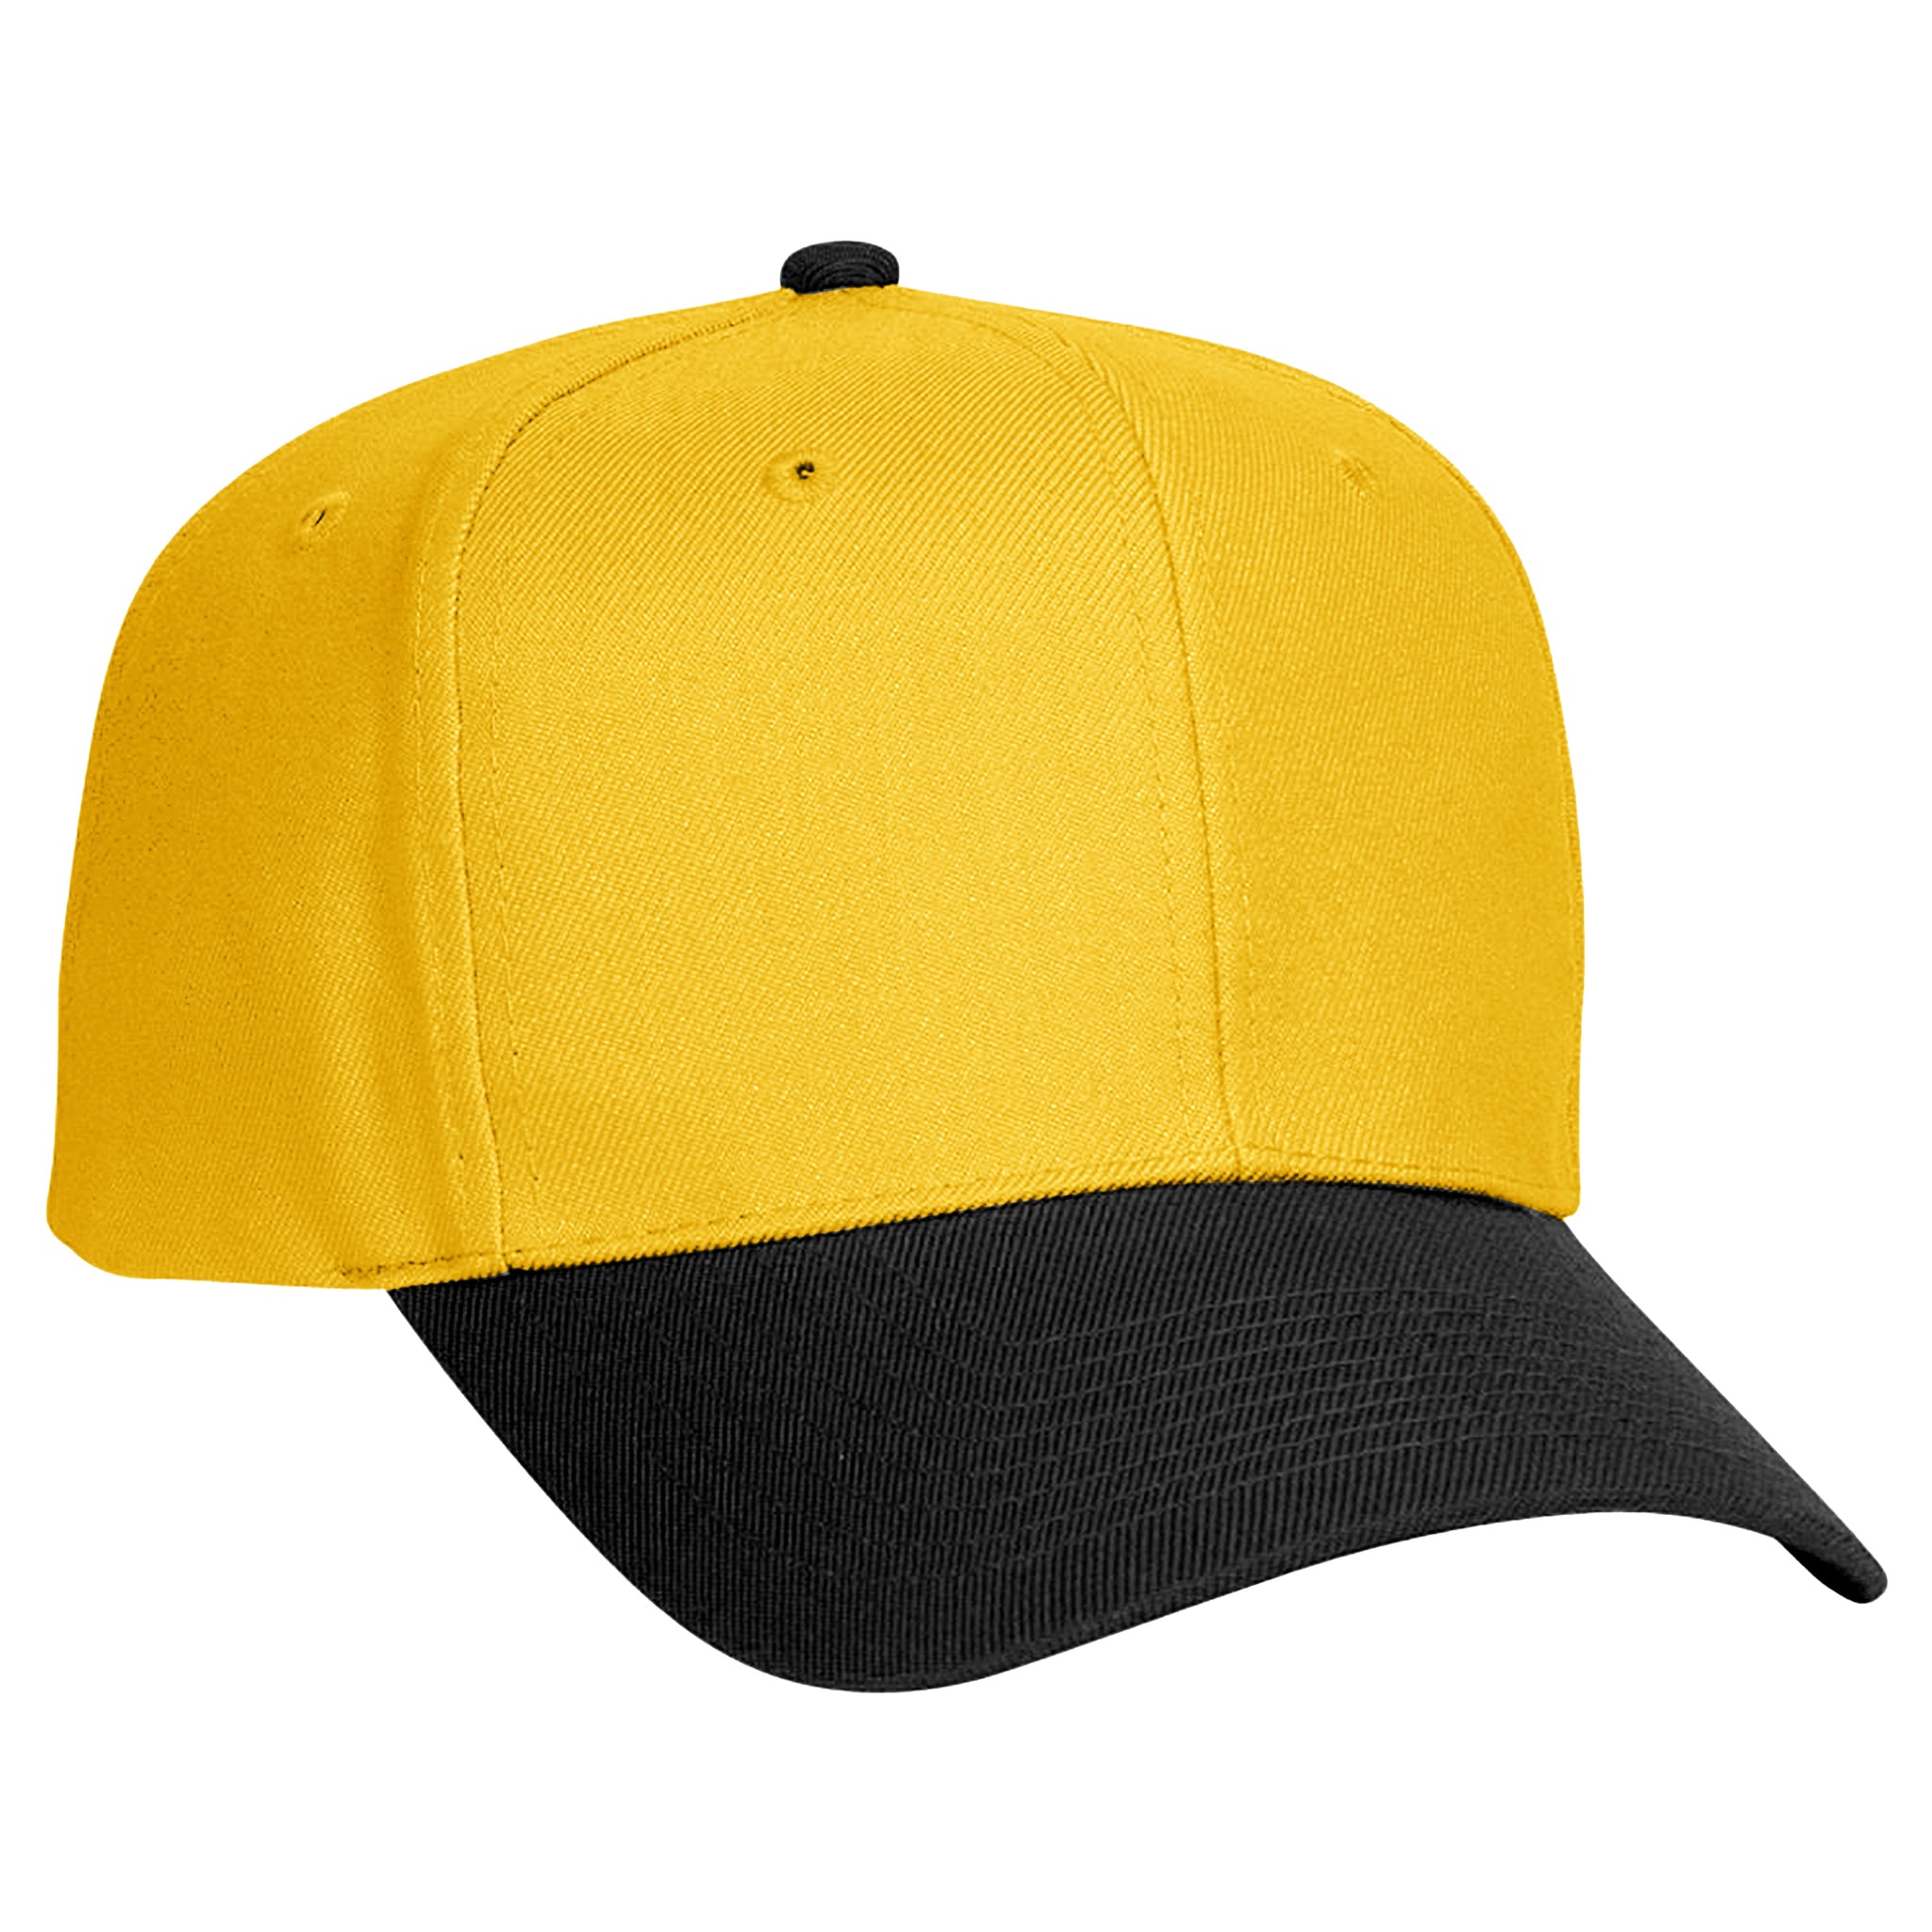 Otto Cap 6 Panel Mid Profile Baseball Cap Iblankcaps Com Blank Hats Caps Super Store